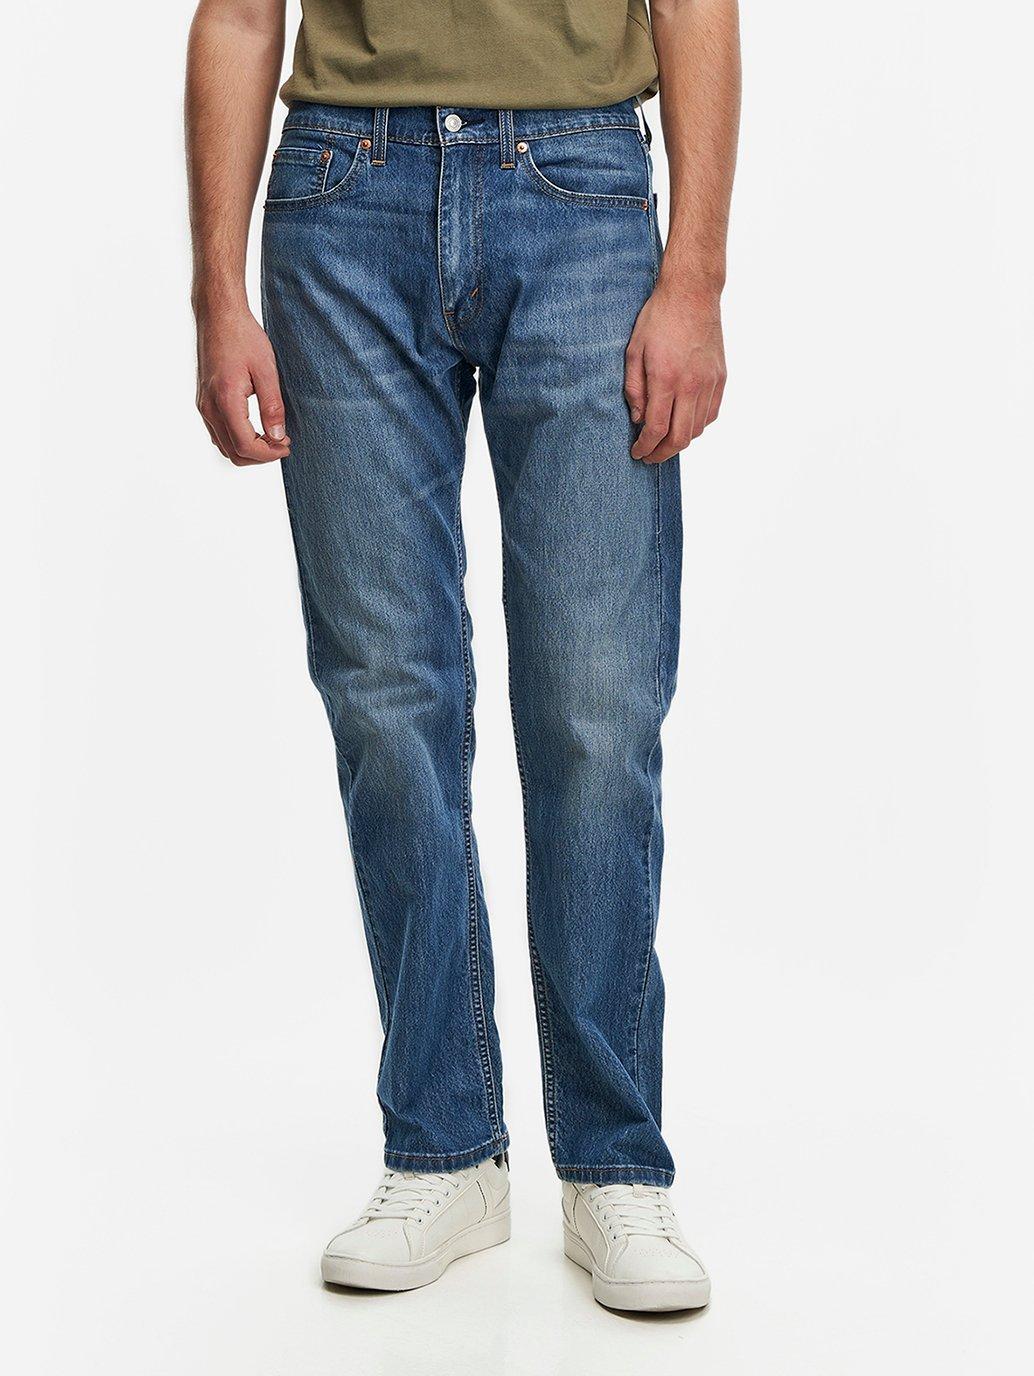 Buy Levi's® Men's 505™ Regular Jeans| Levi’s® Official Online Store MY